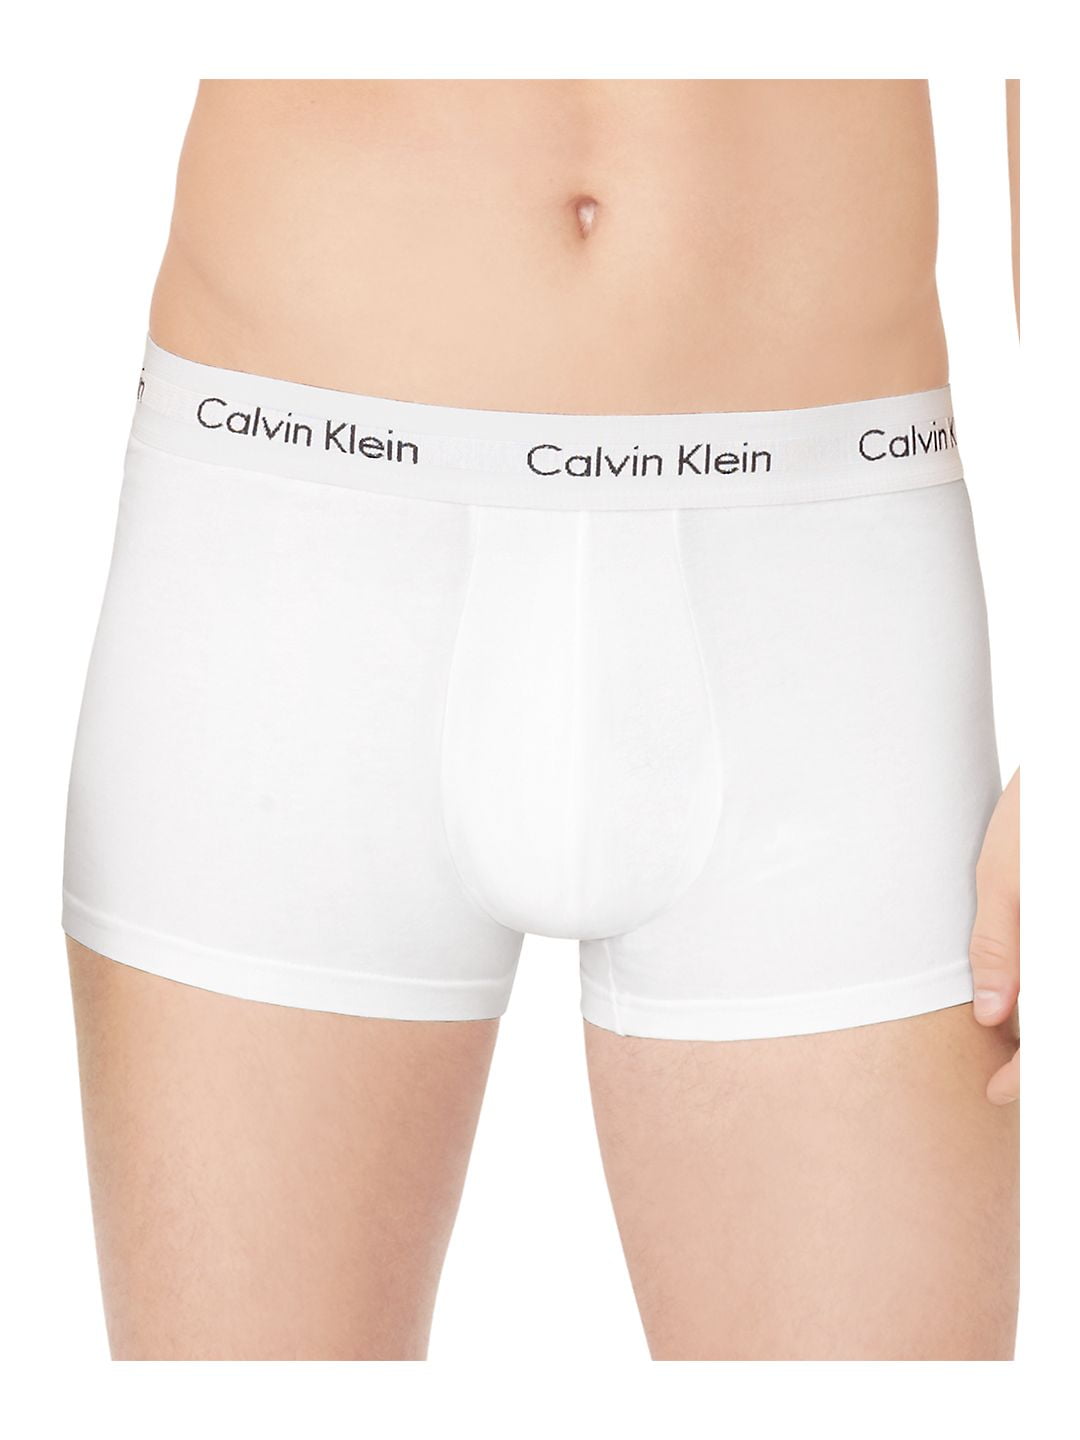 Men's Cotton Rise Trunks (3-Pack) - Walmart.com